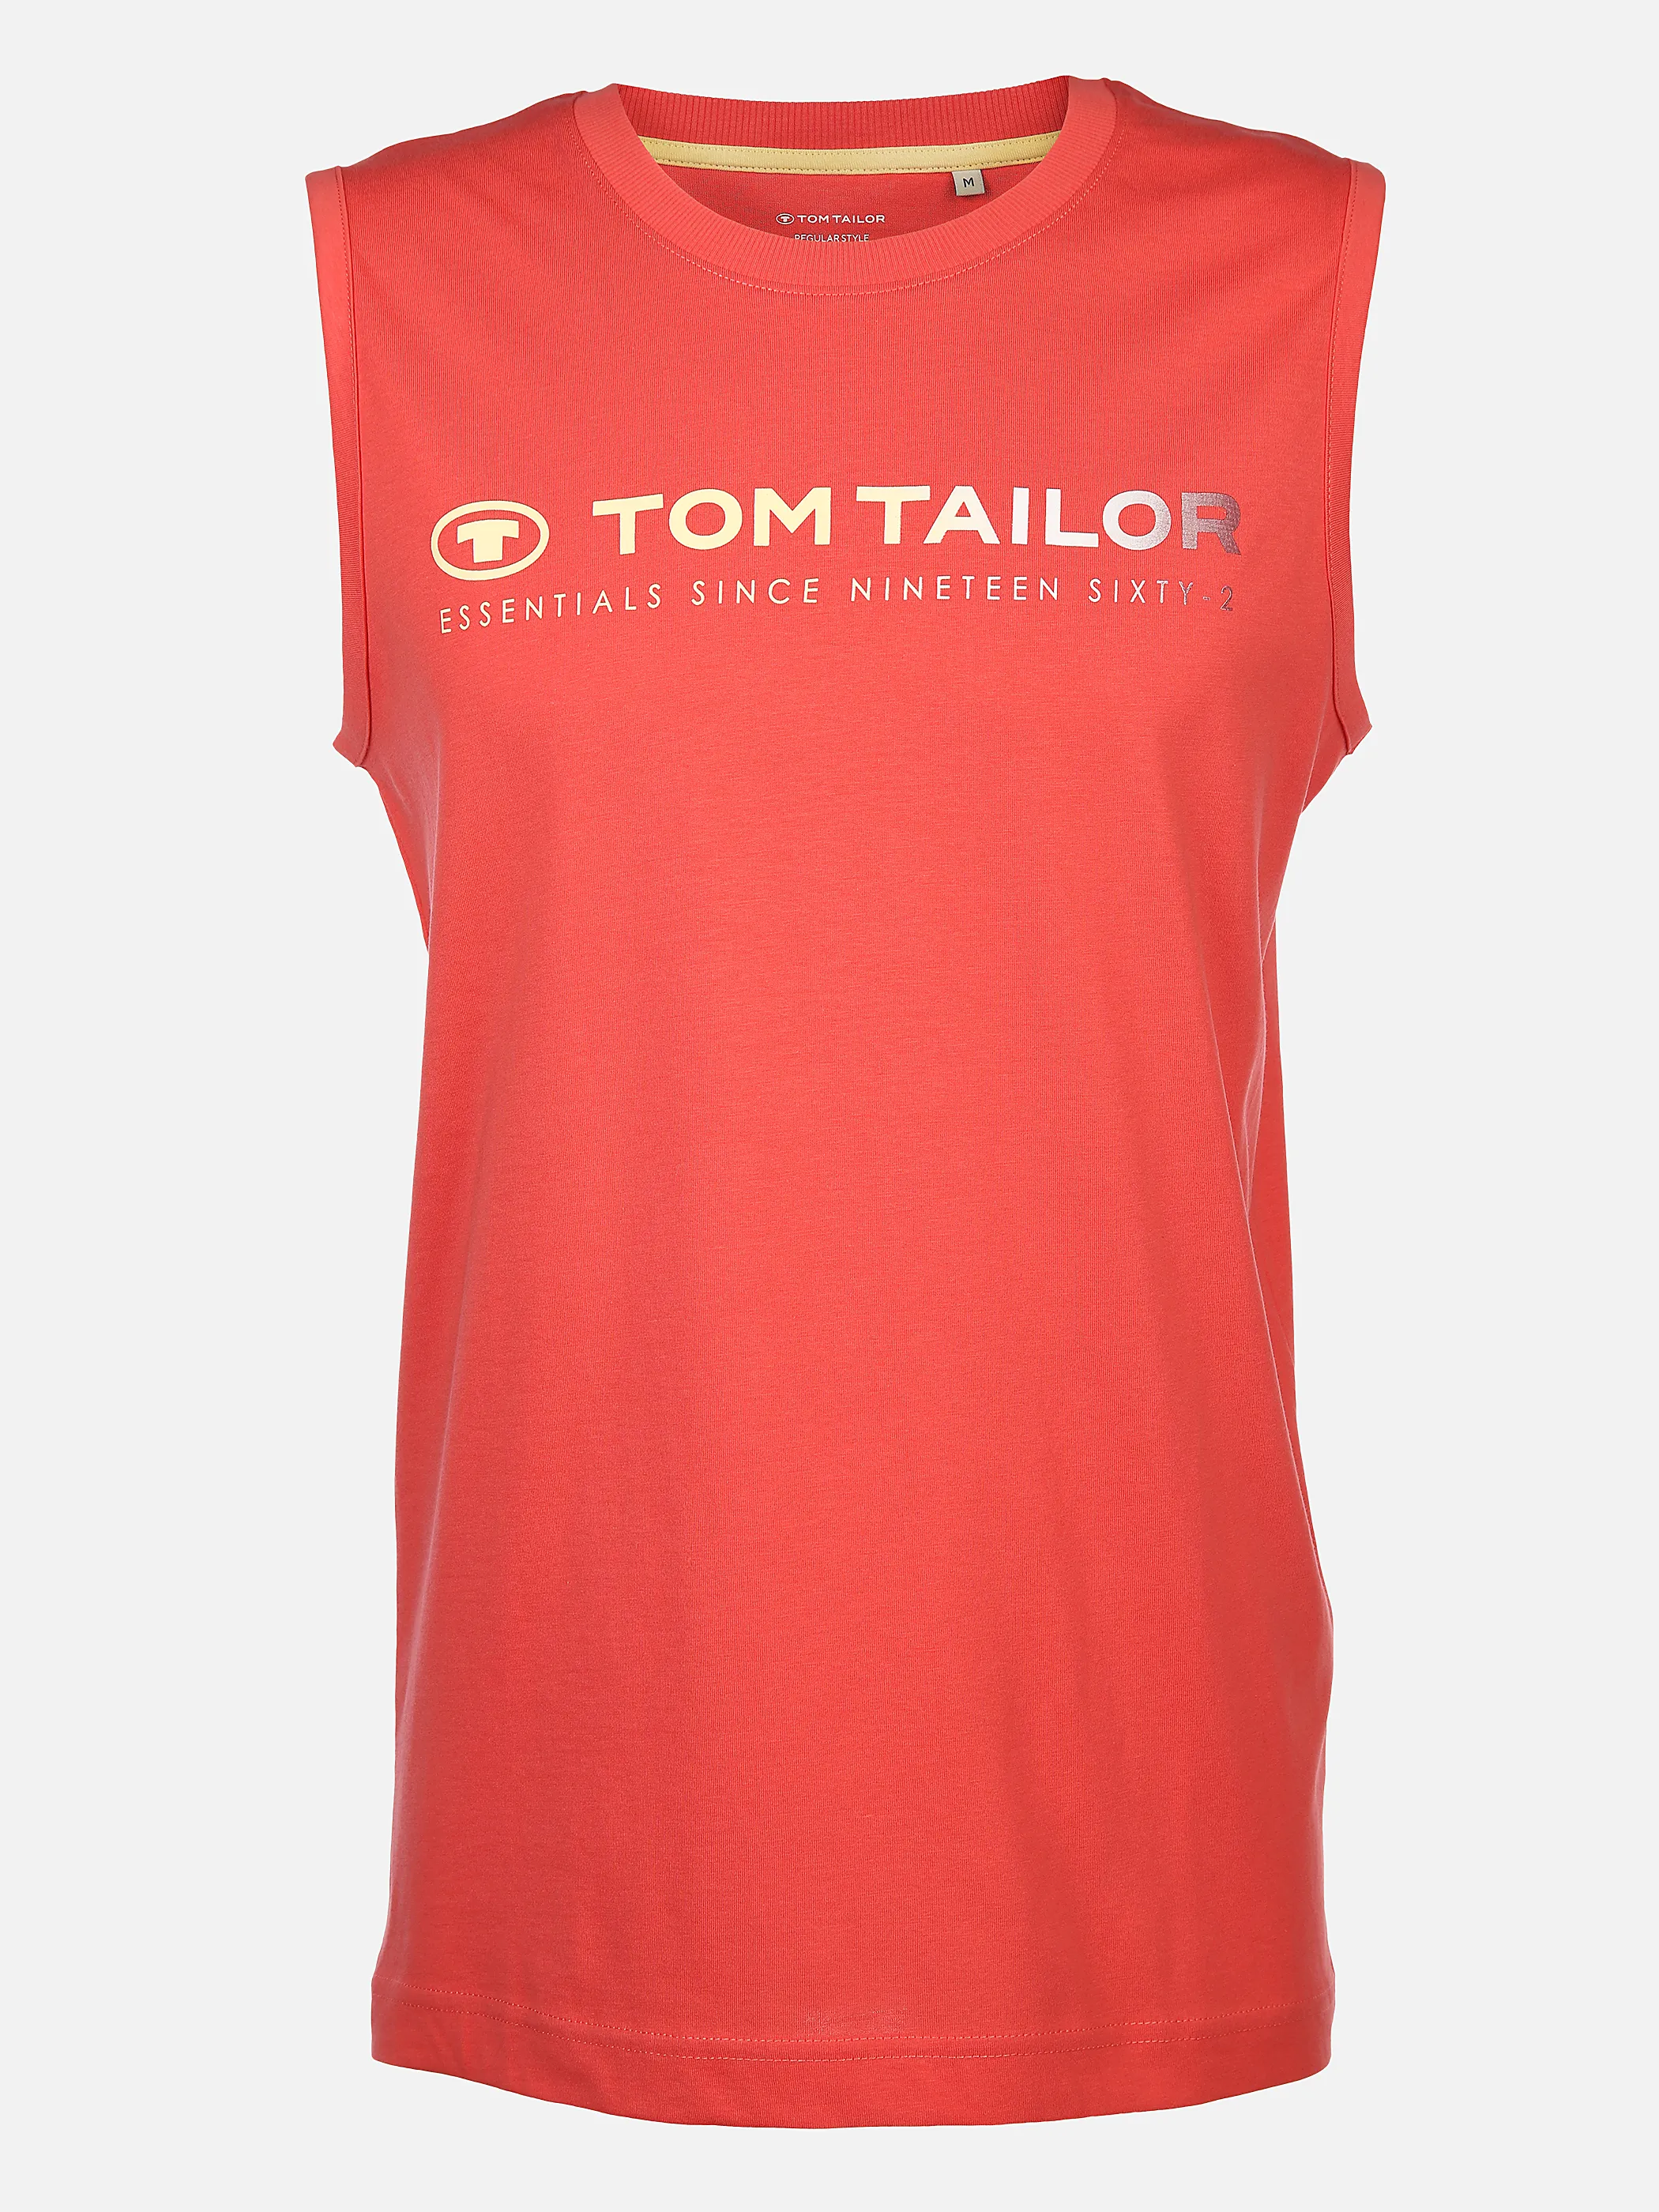 Tom Tailor 1041866 printed tanktop Pink 895643 26202 1